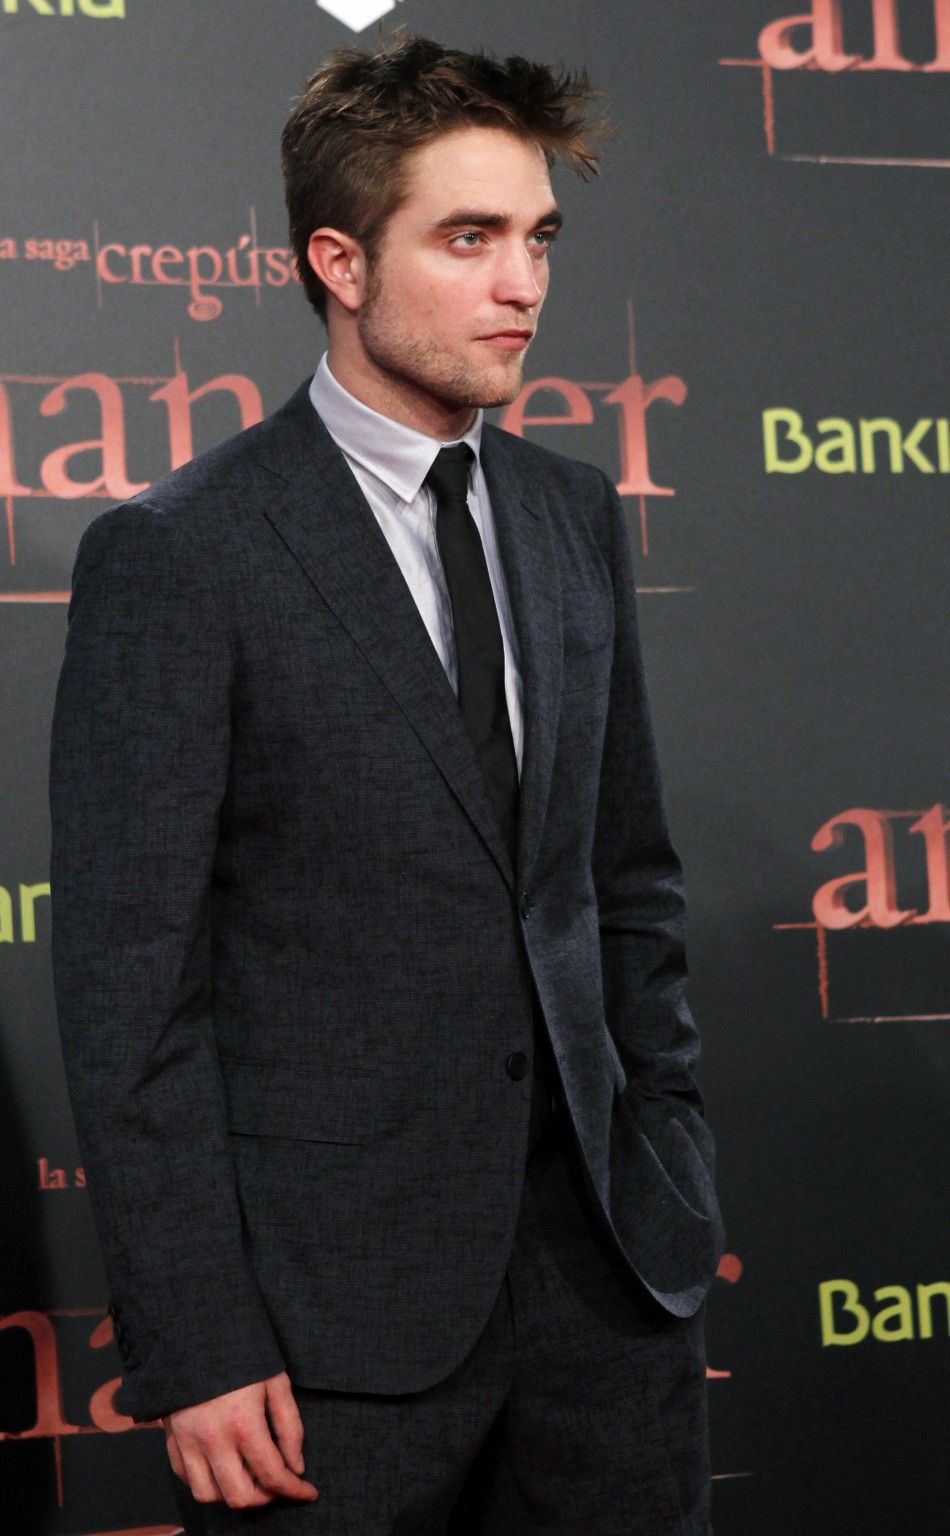 6. Robert Pattinson